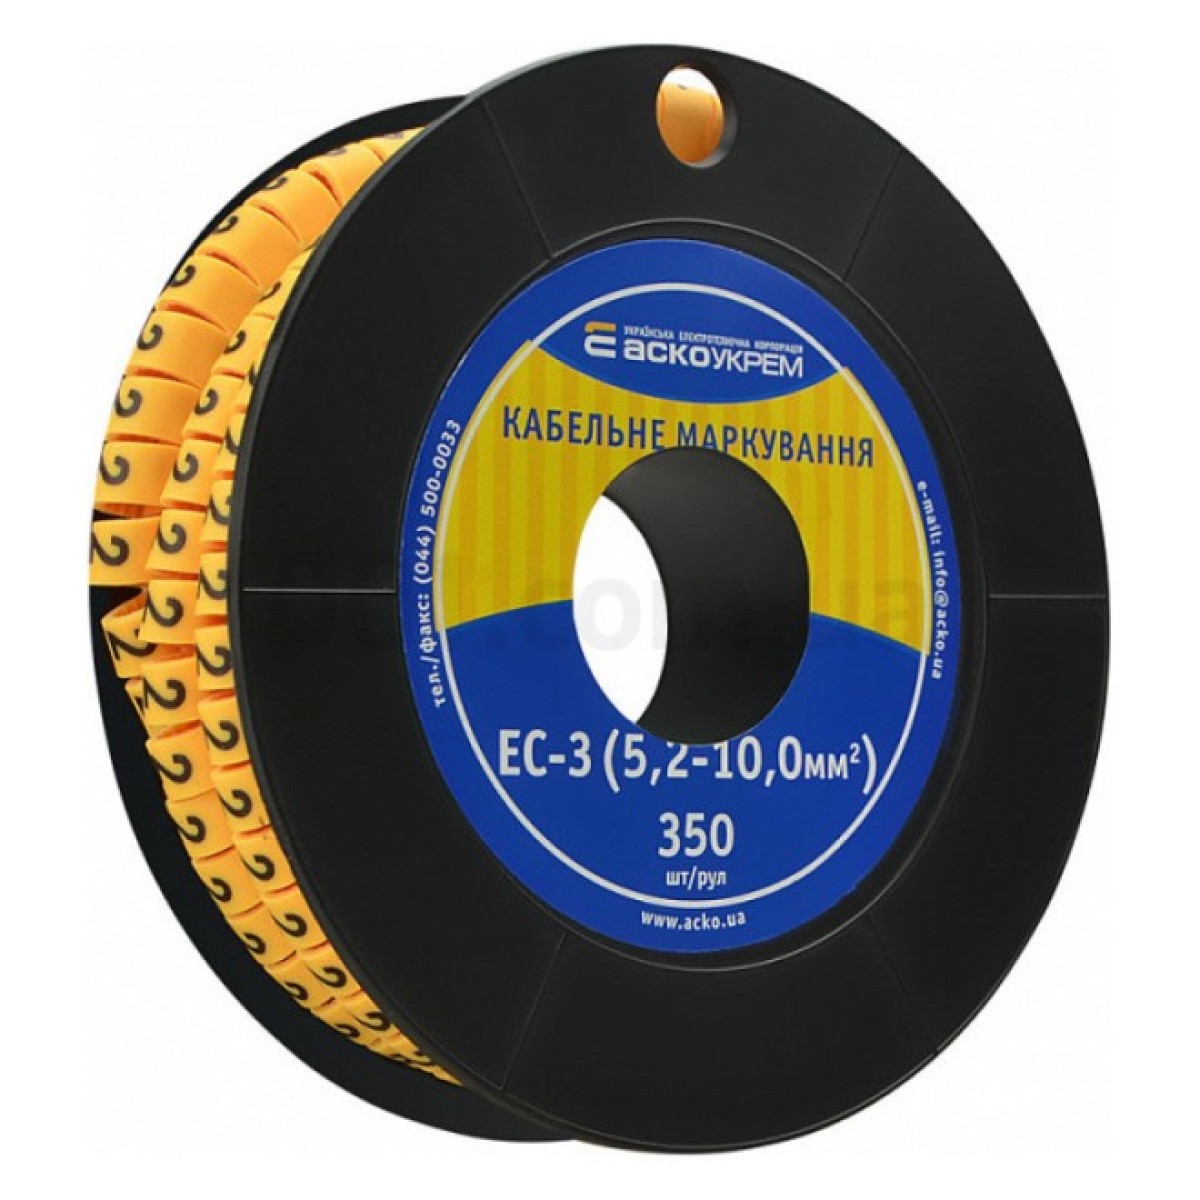 Маркировка EC-3 для кабеля 5,2-10,0 мм² символ «2» (рулон 250 шт.), АСКО-УКРЕМ 98_98.jpg - фото 1